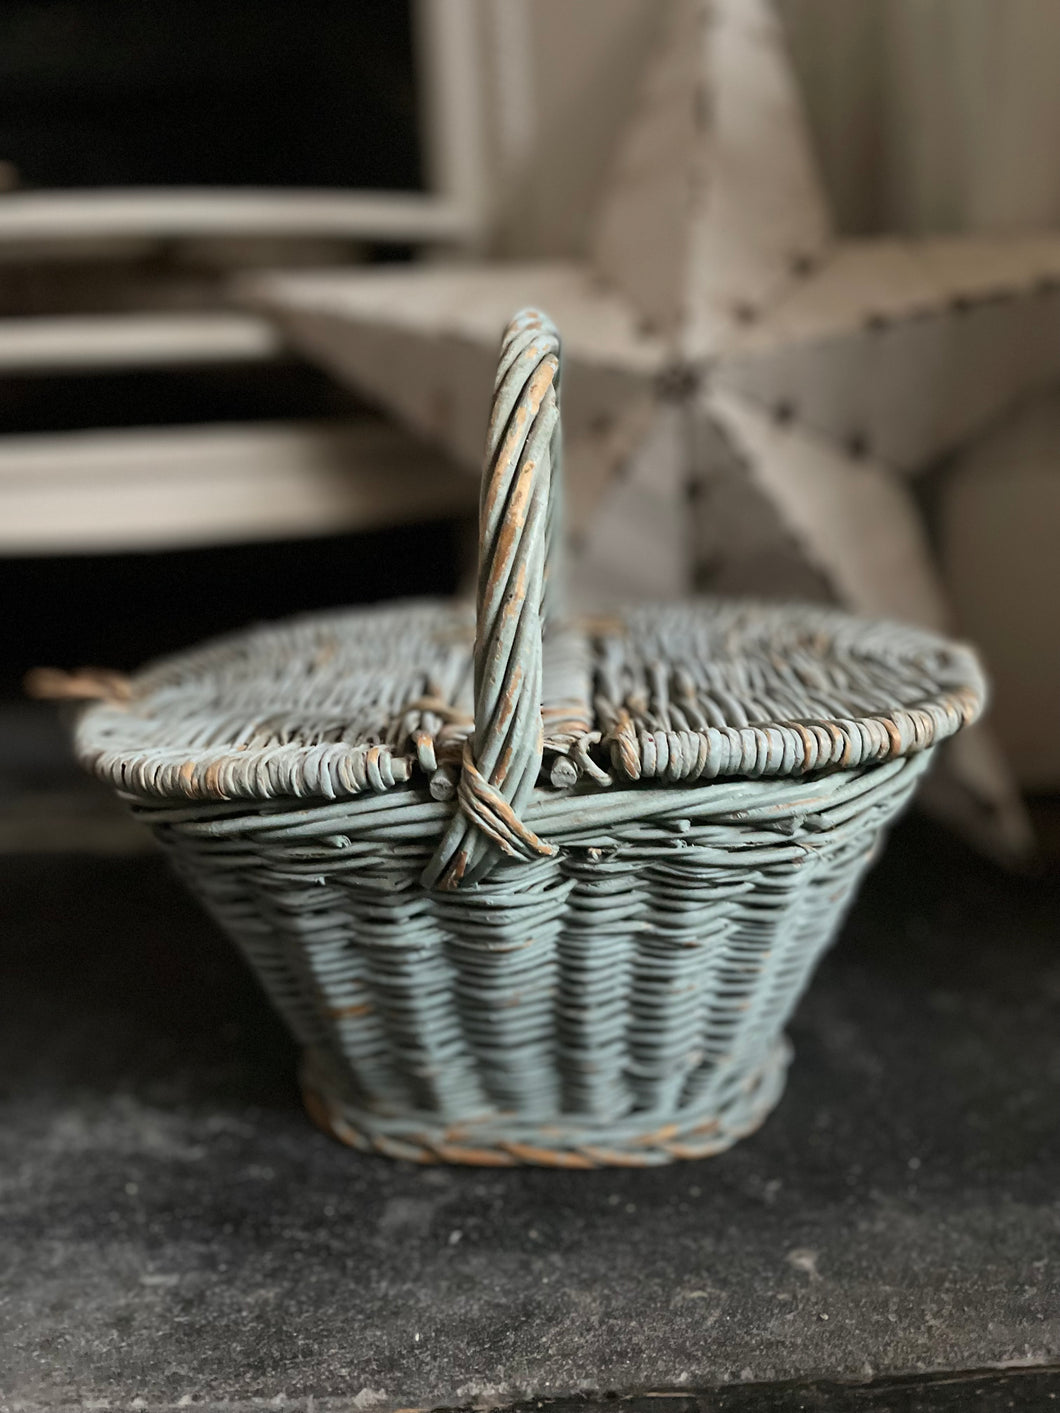 Pretty French sewing basket